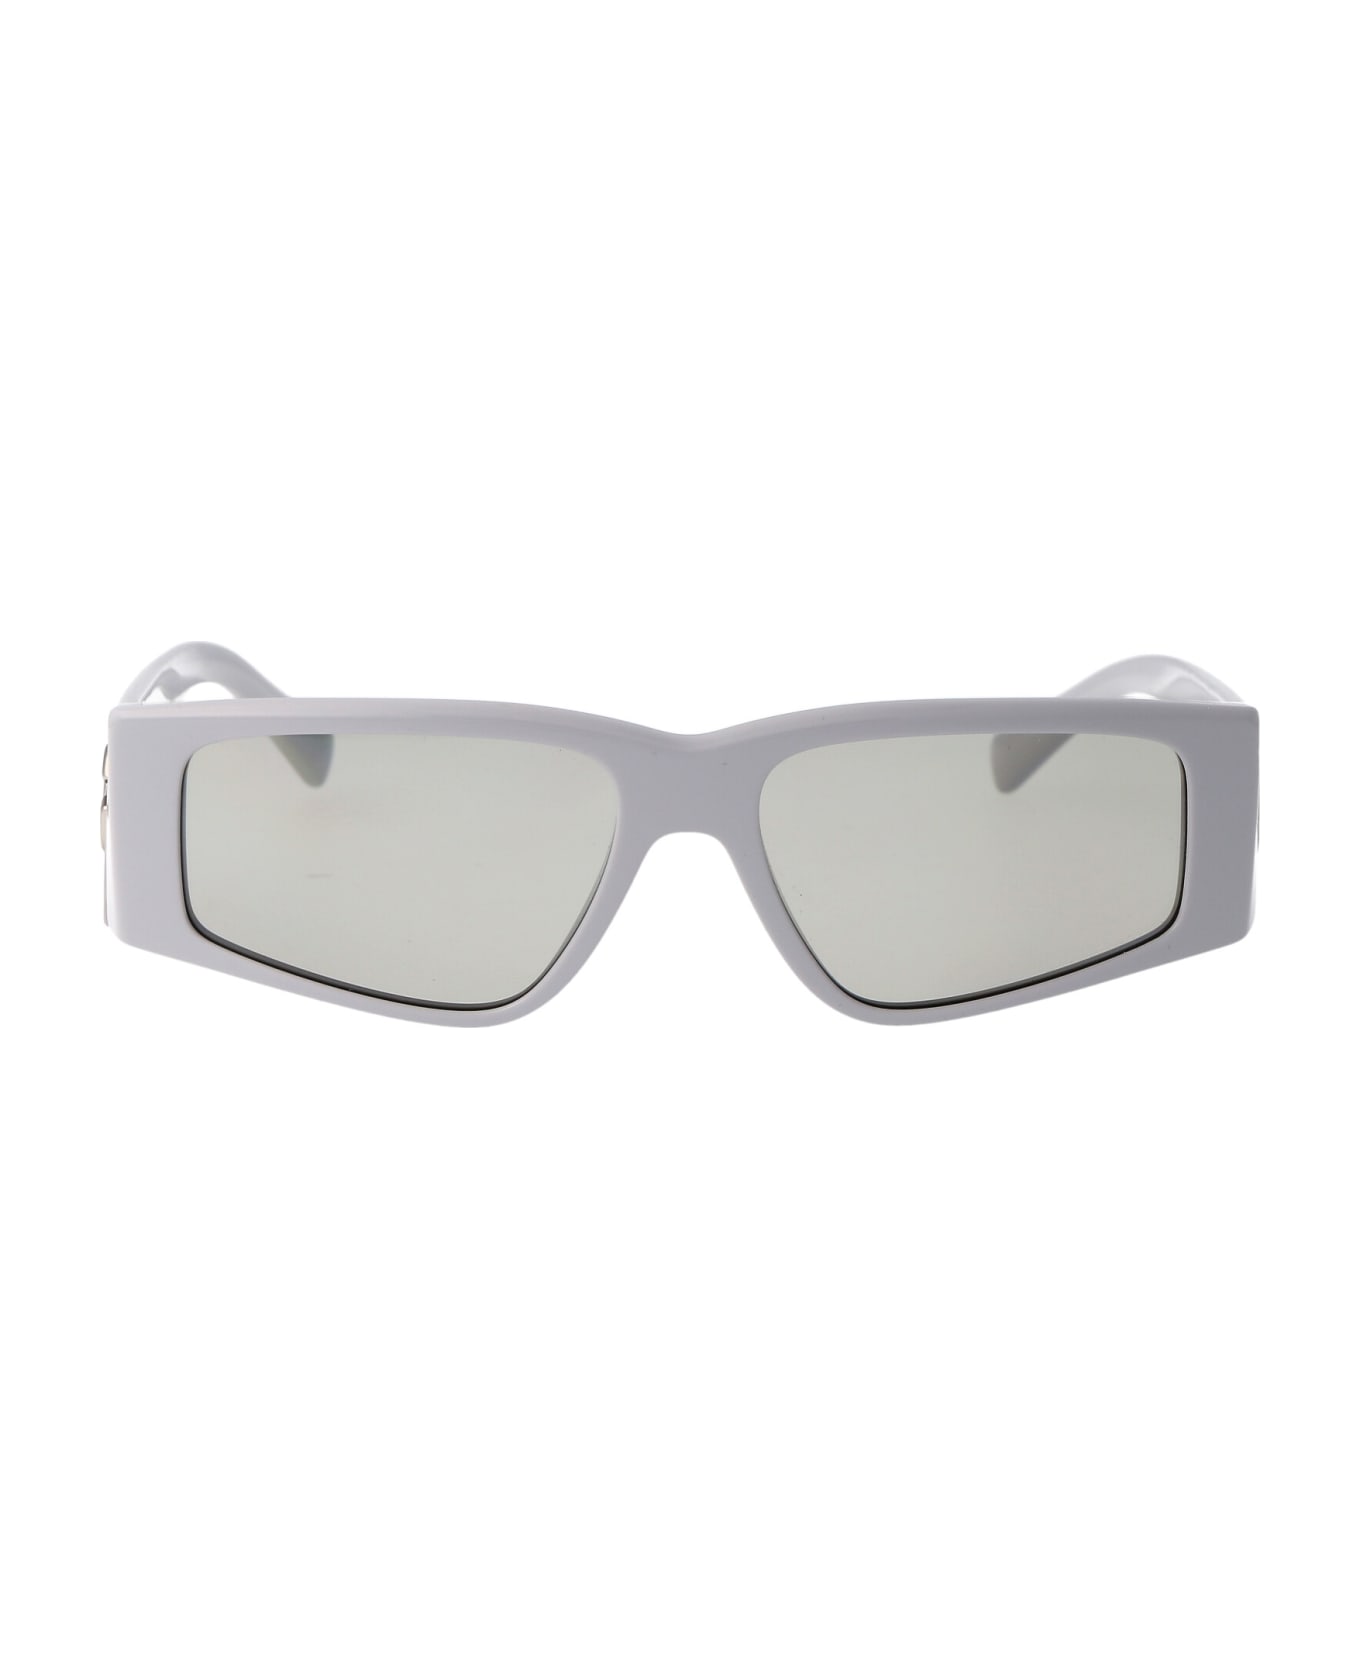 Great fitting sunglasses Eyewear 0dg4453 Sunglasses - 341887 Light Grey